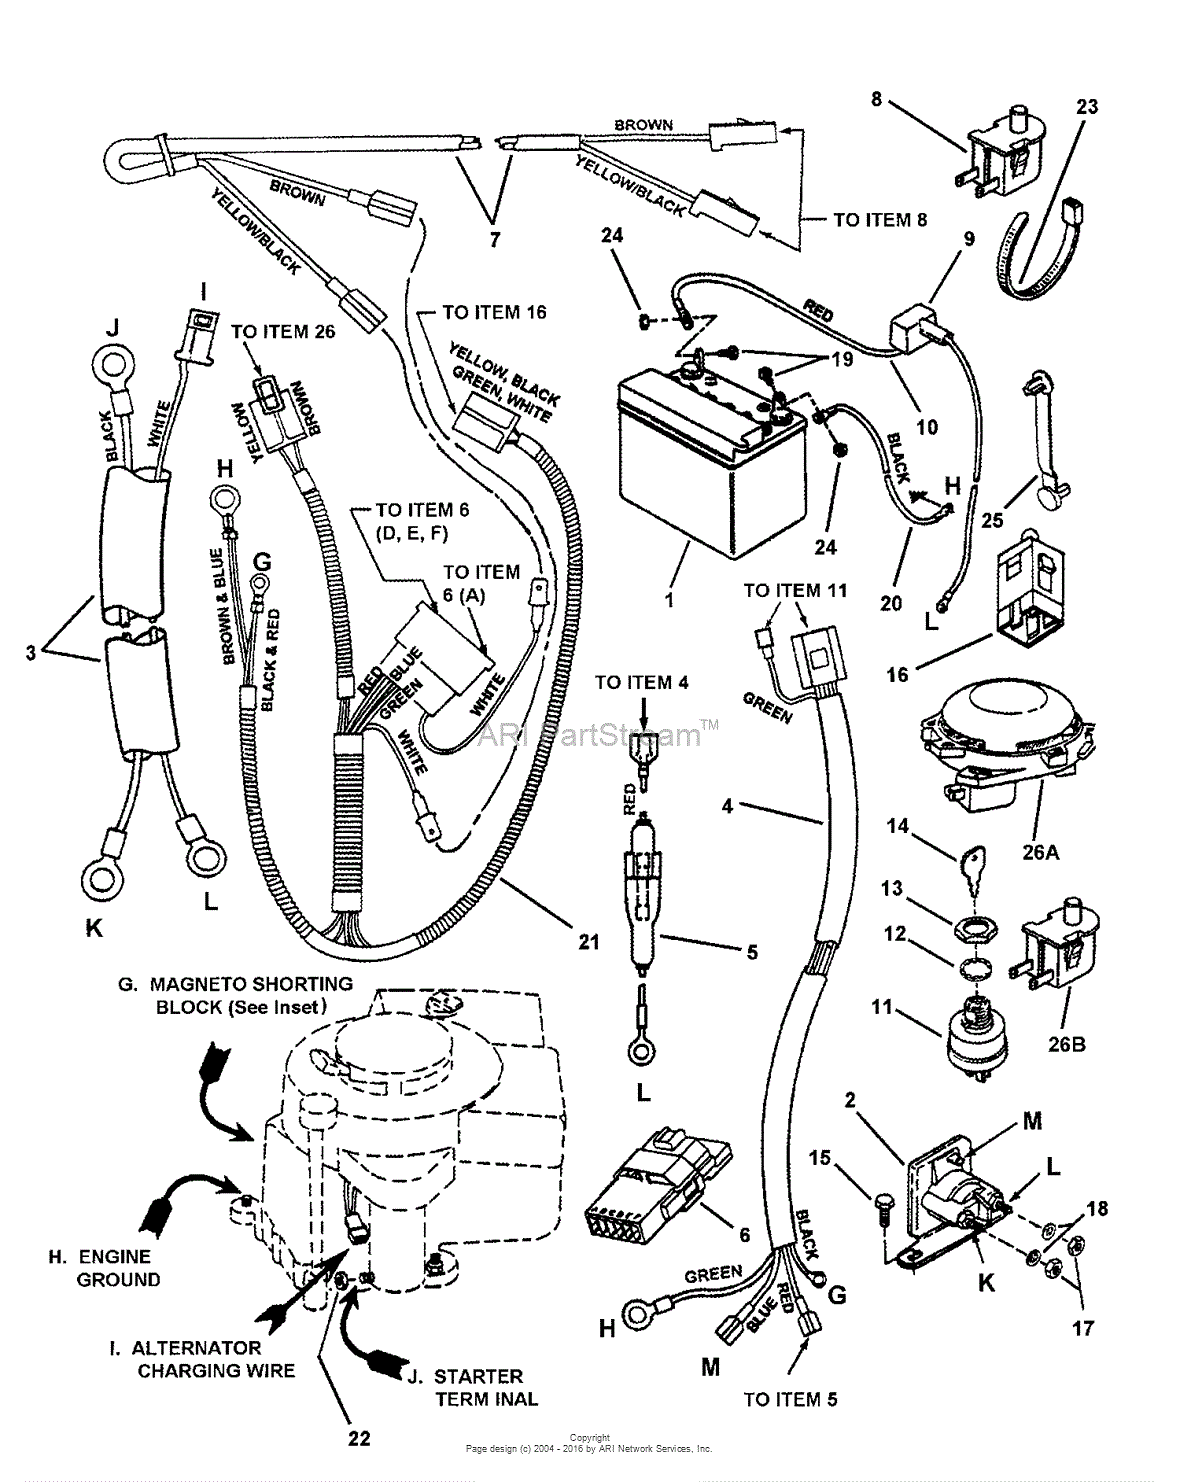 Vanguard 23 Wiring Diagram